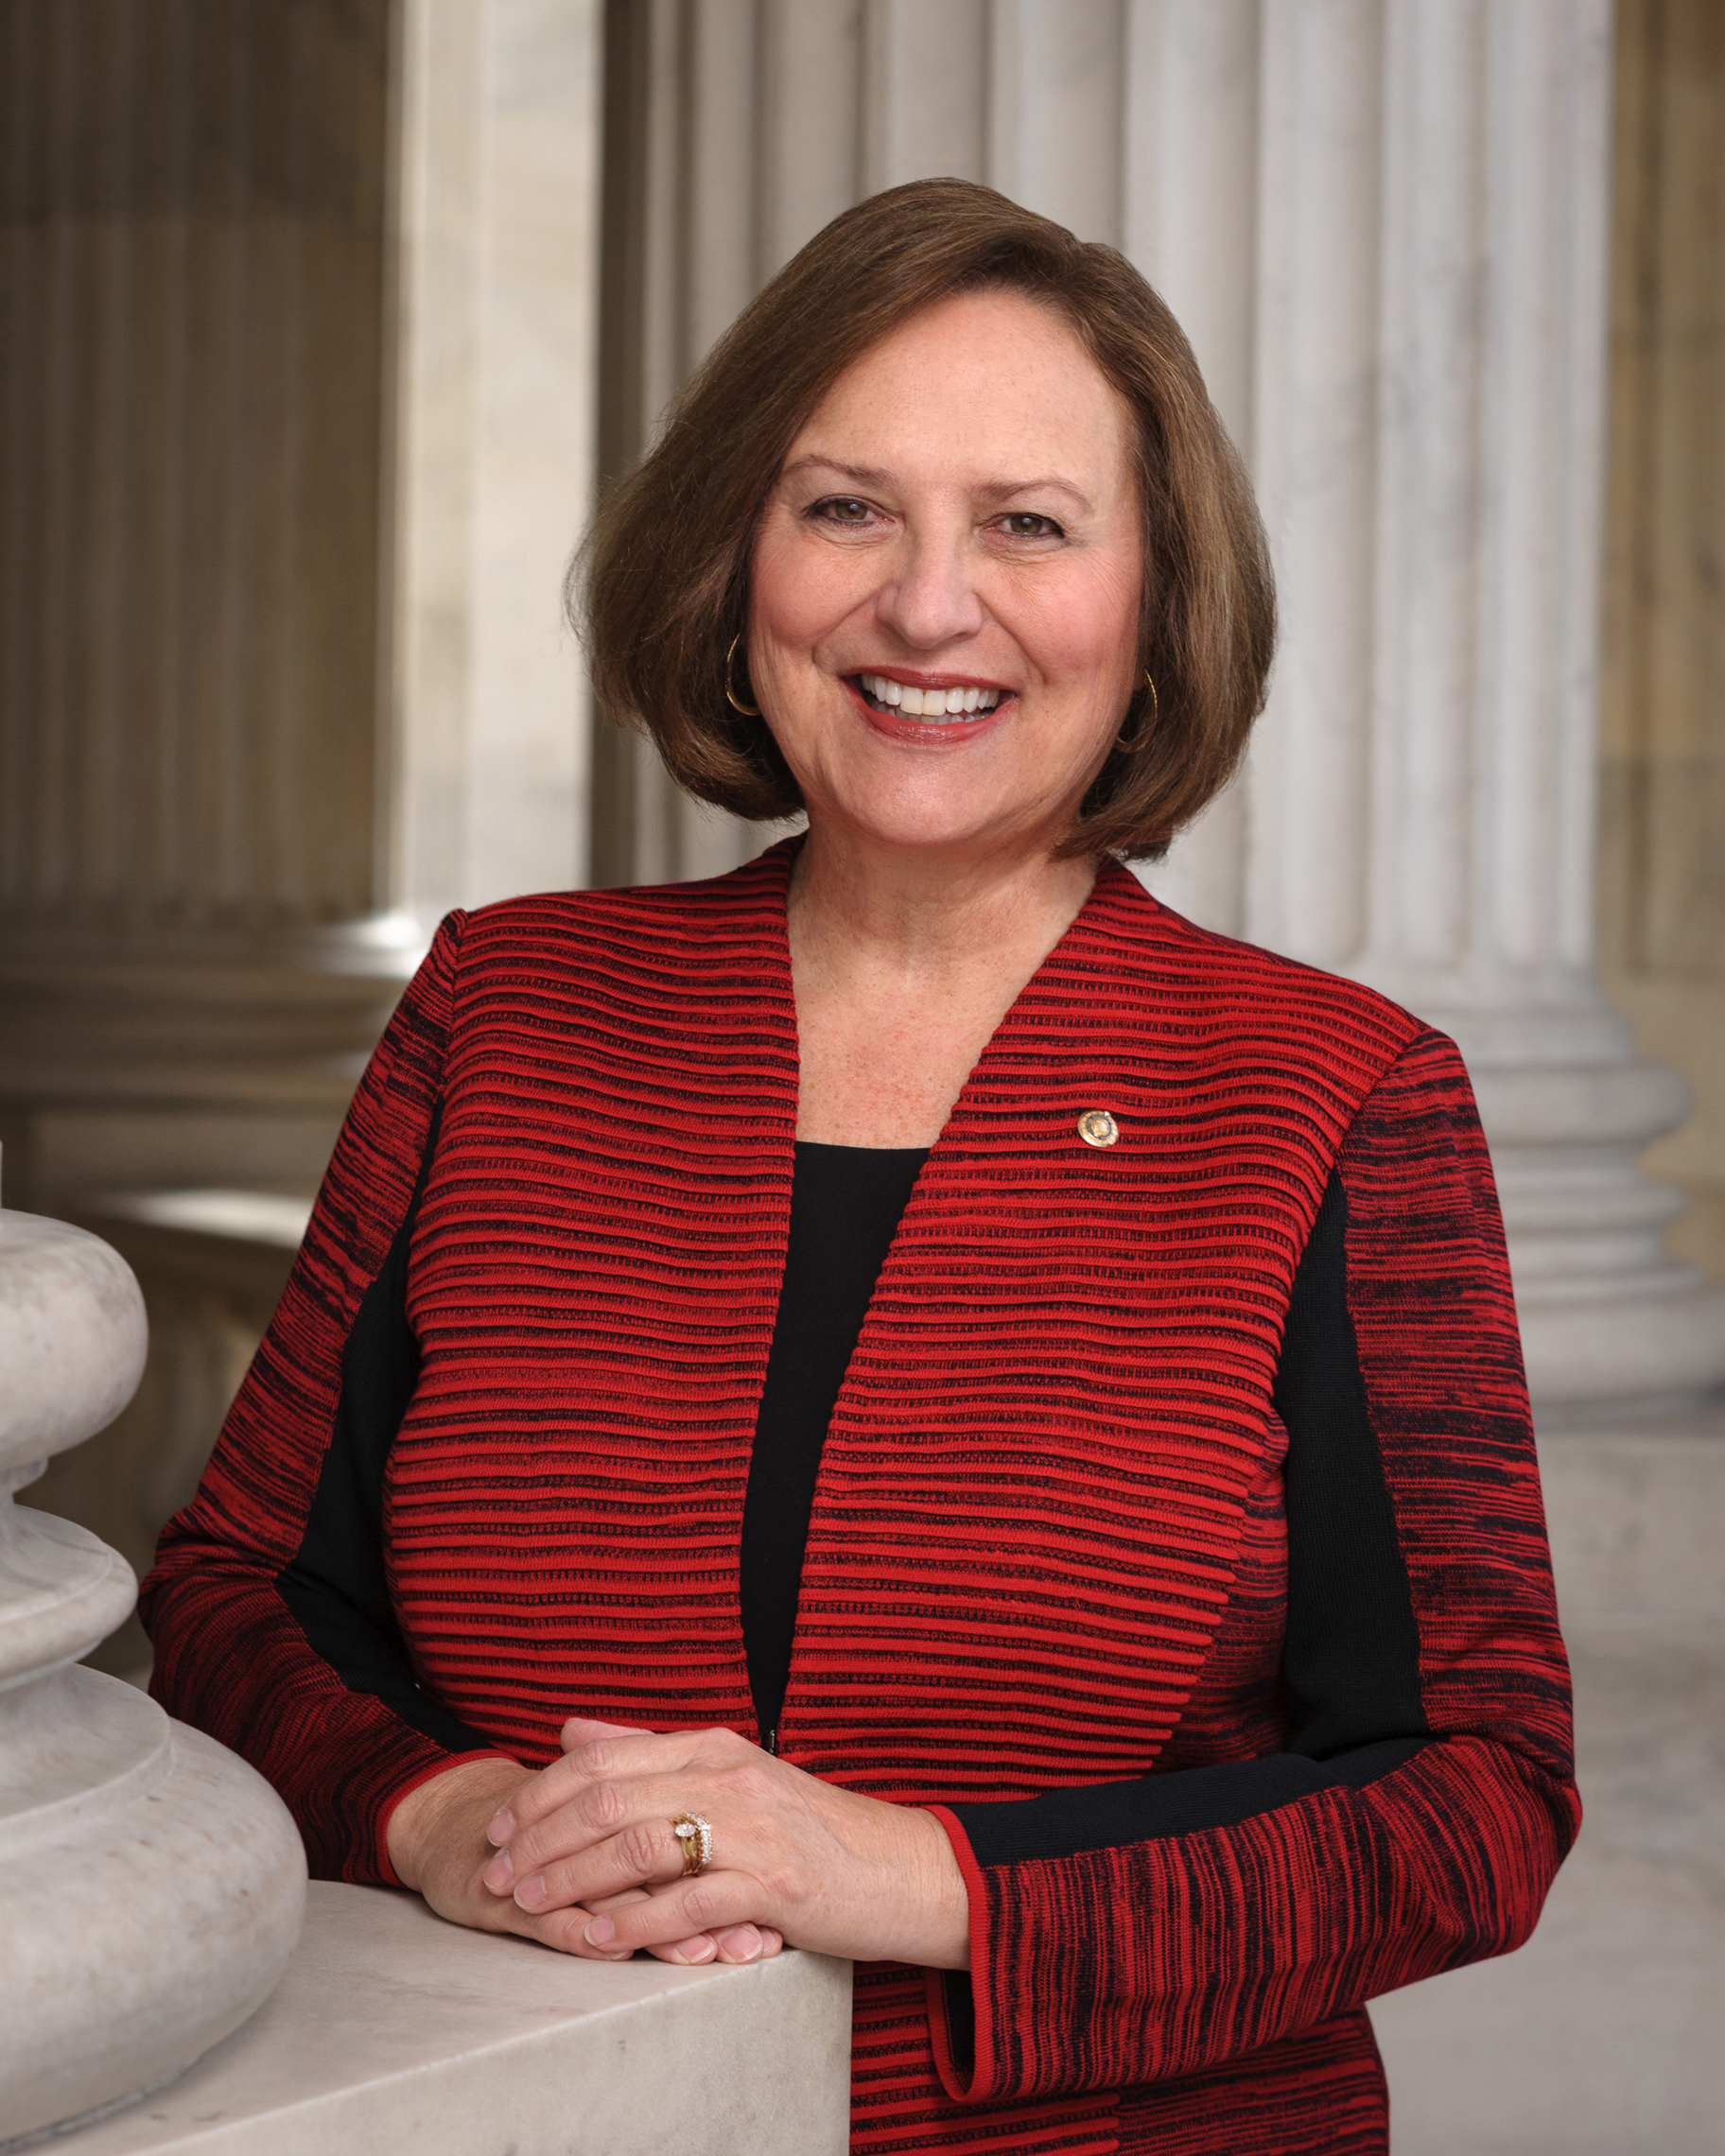 Official Photograph - United States Senator Deb Fischer for Nebraska